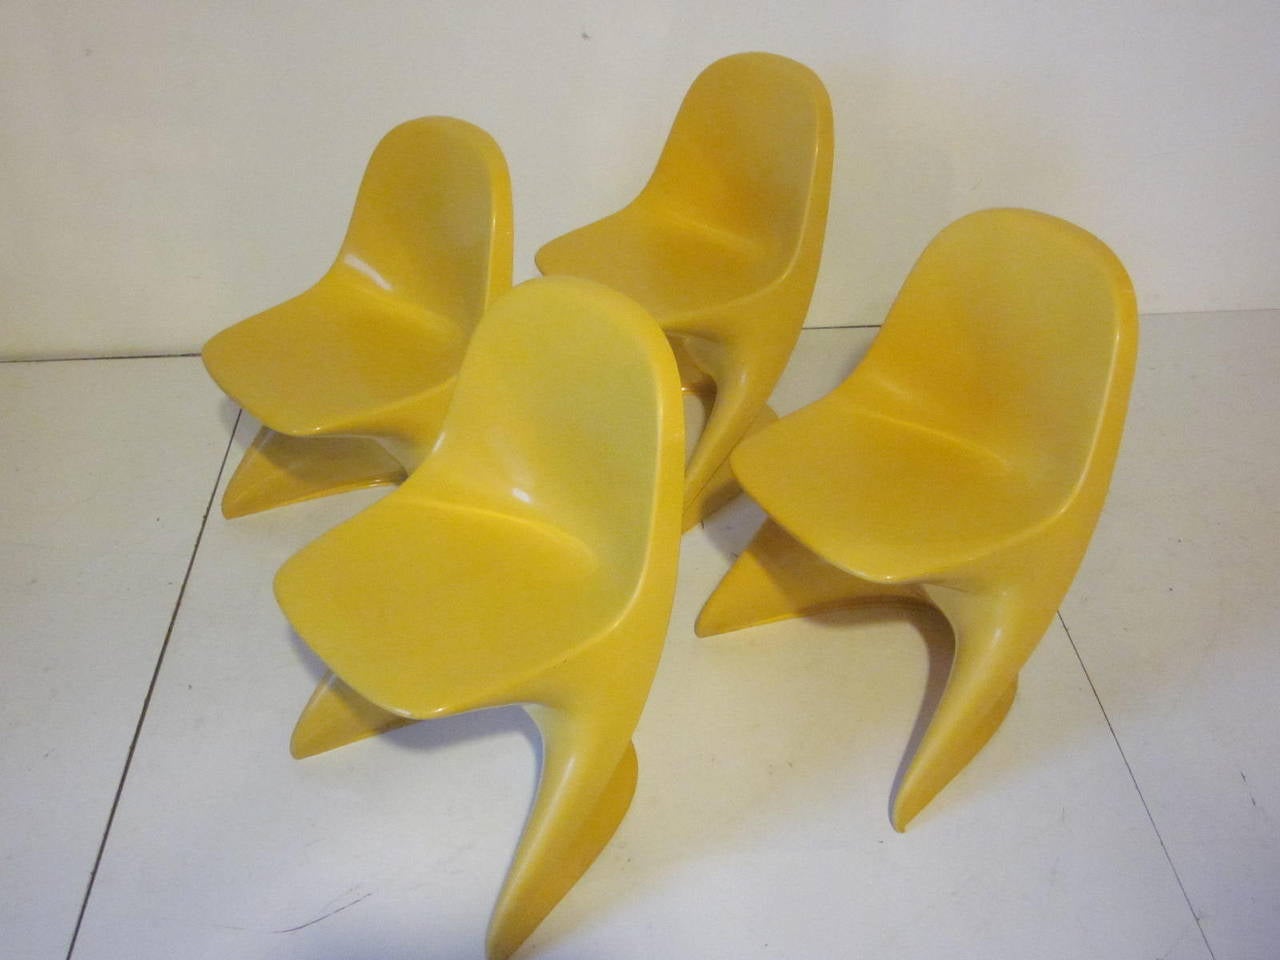 German Casalino Molded Children's Chairs